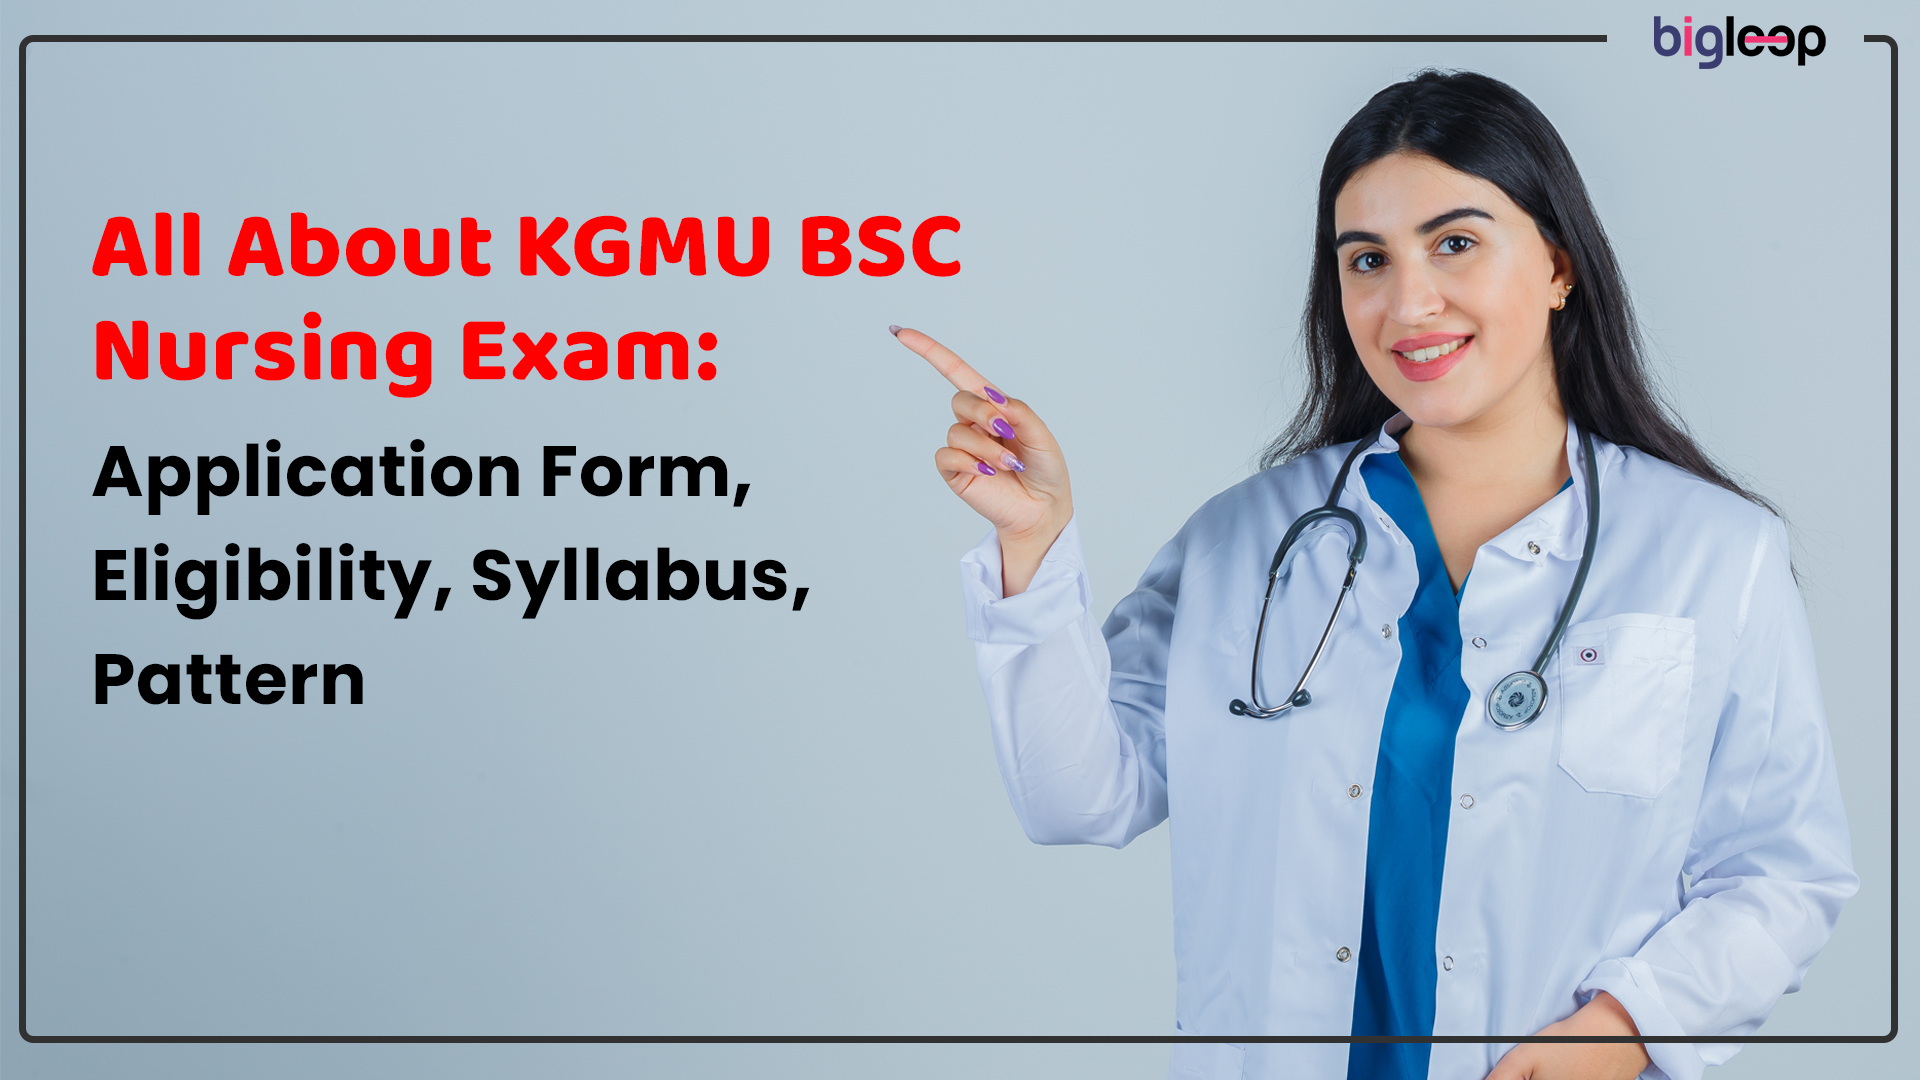 All About KGMU BSC Nursing Exam: Application Form, Eligibility, Syllabus, Pattern